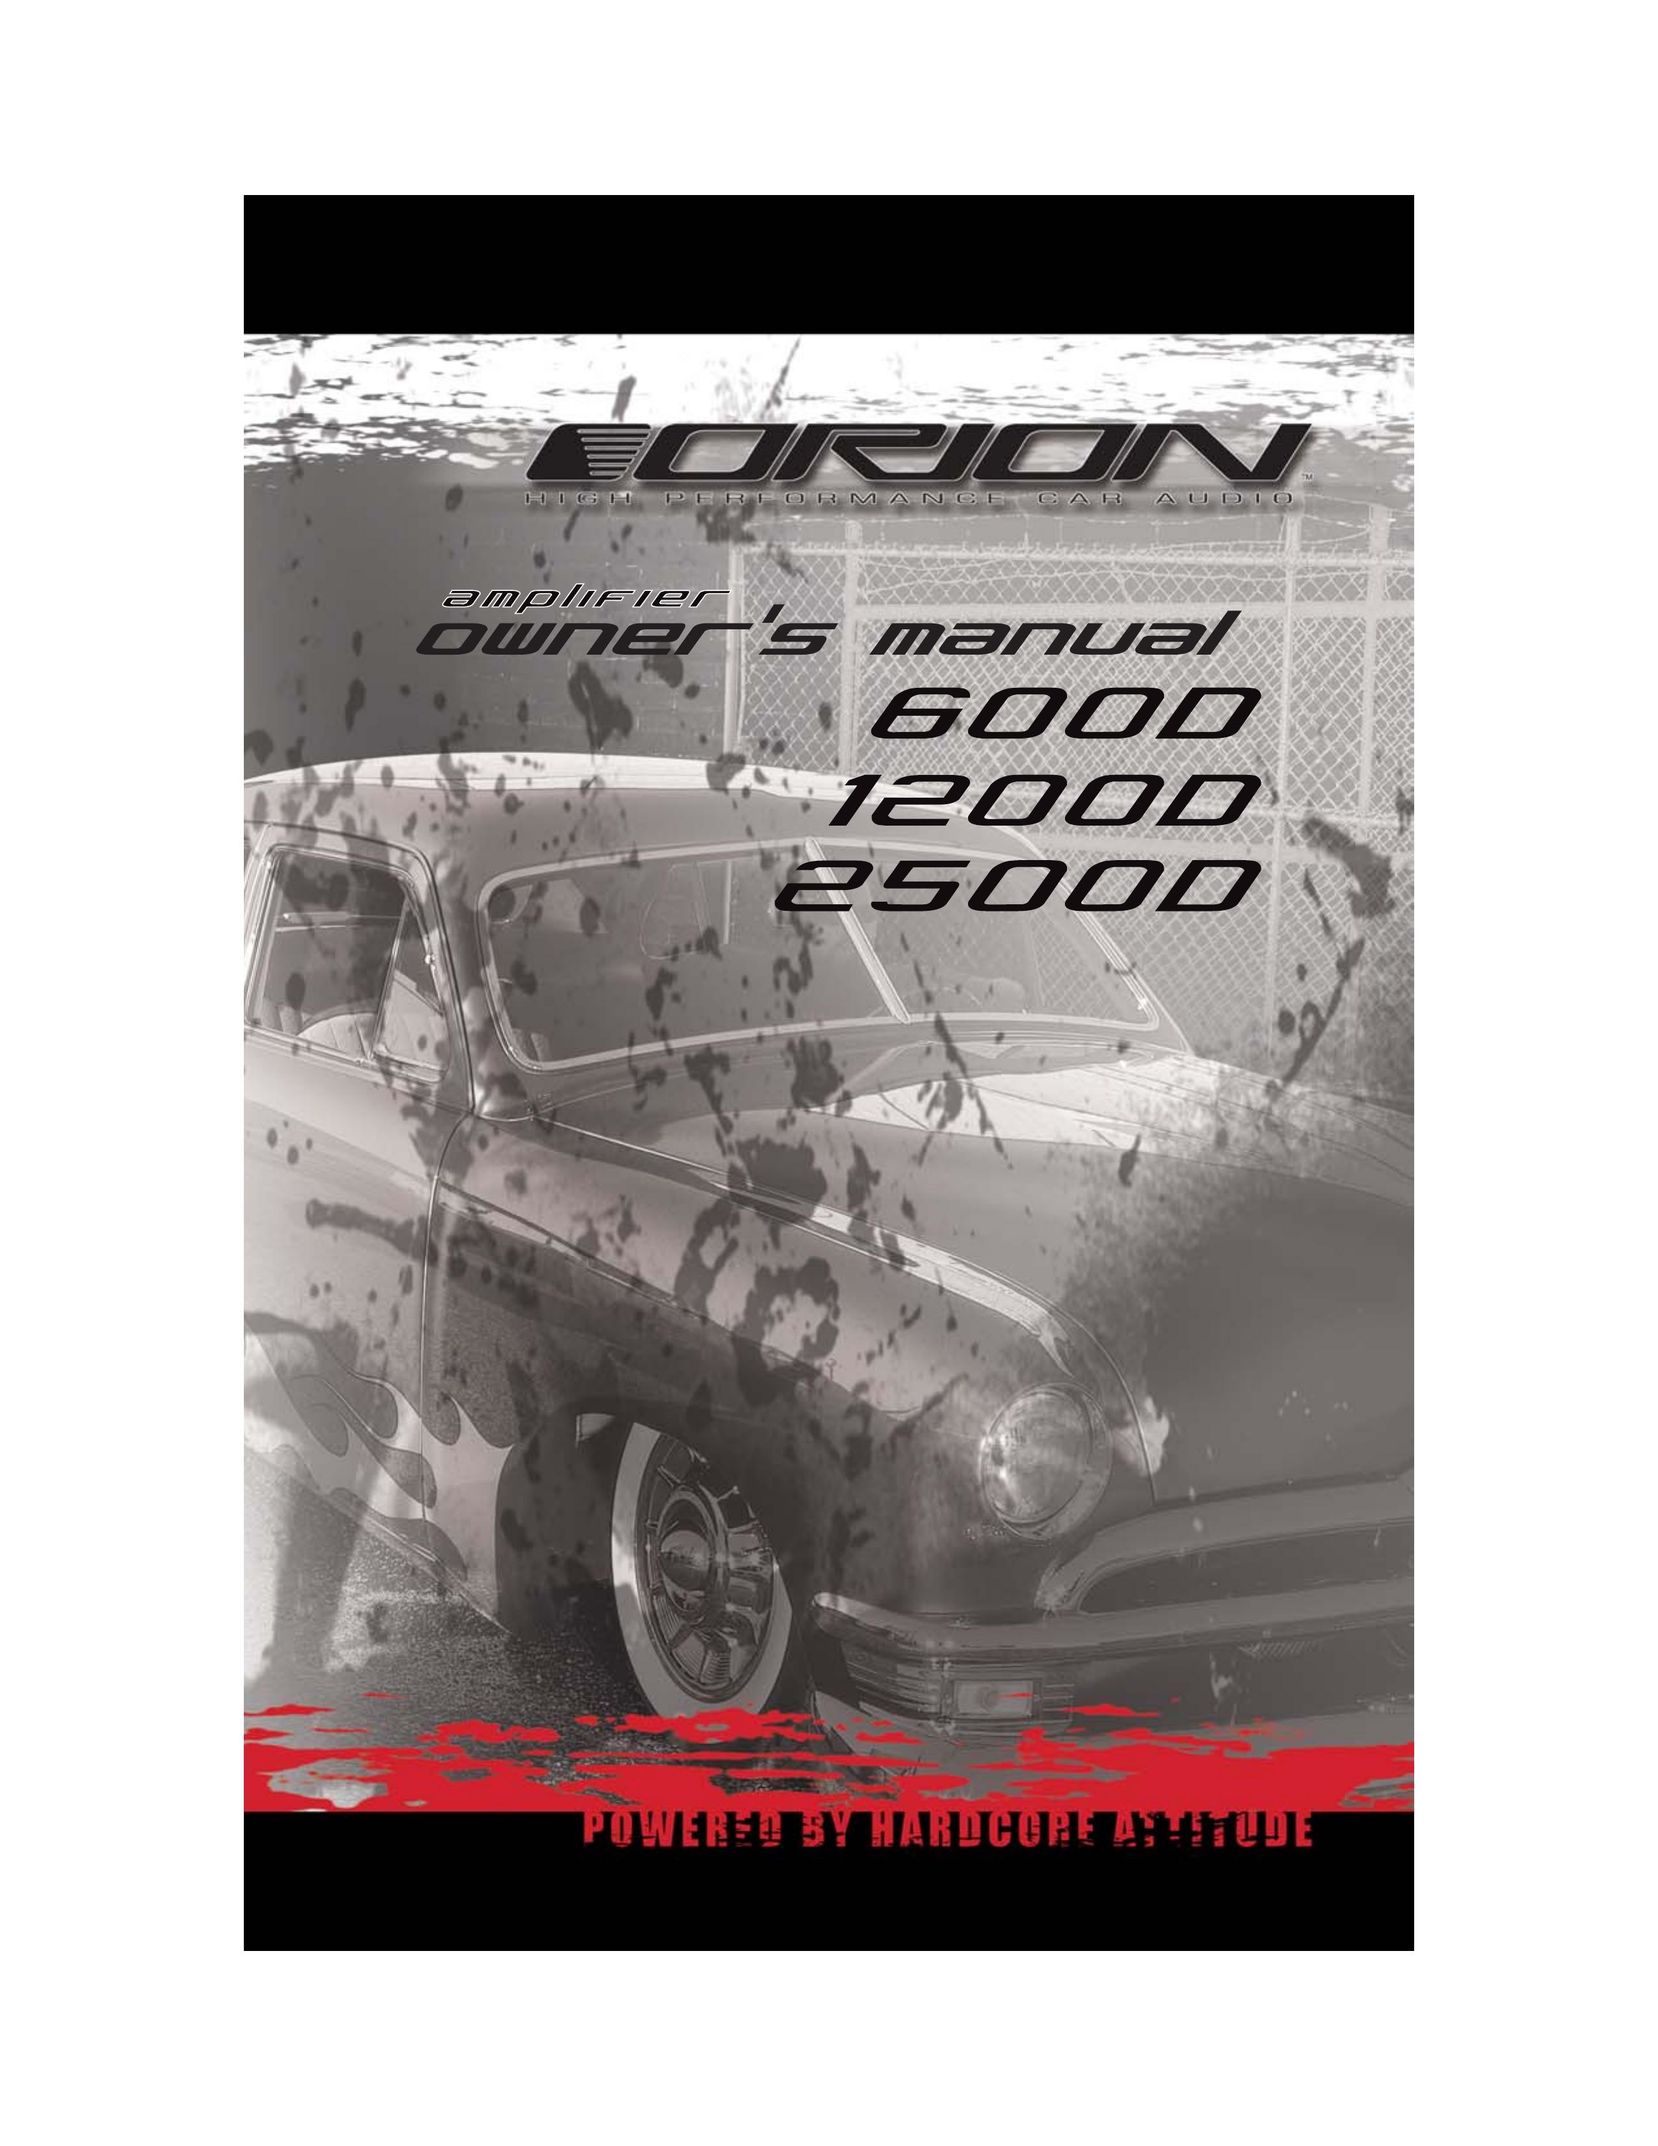 Orion Car Audio 600D Car Amplifier User Manual